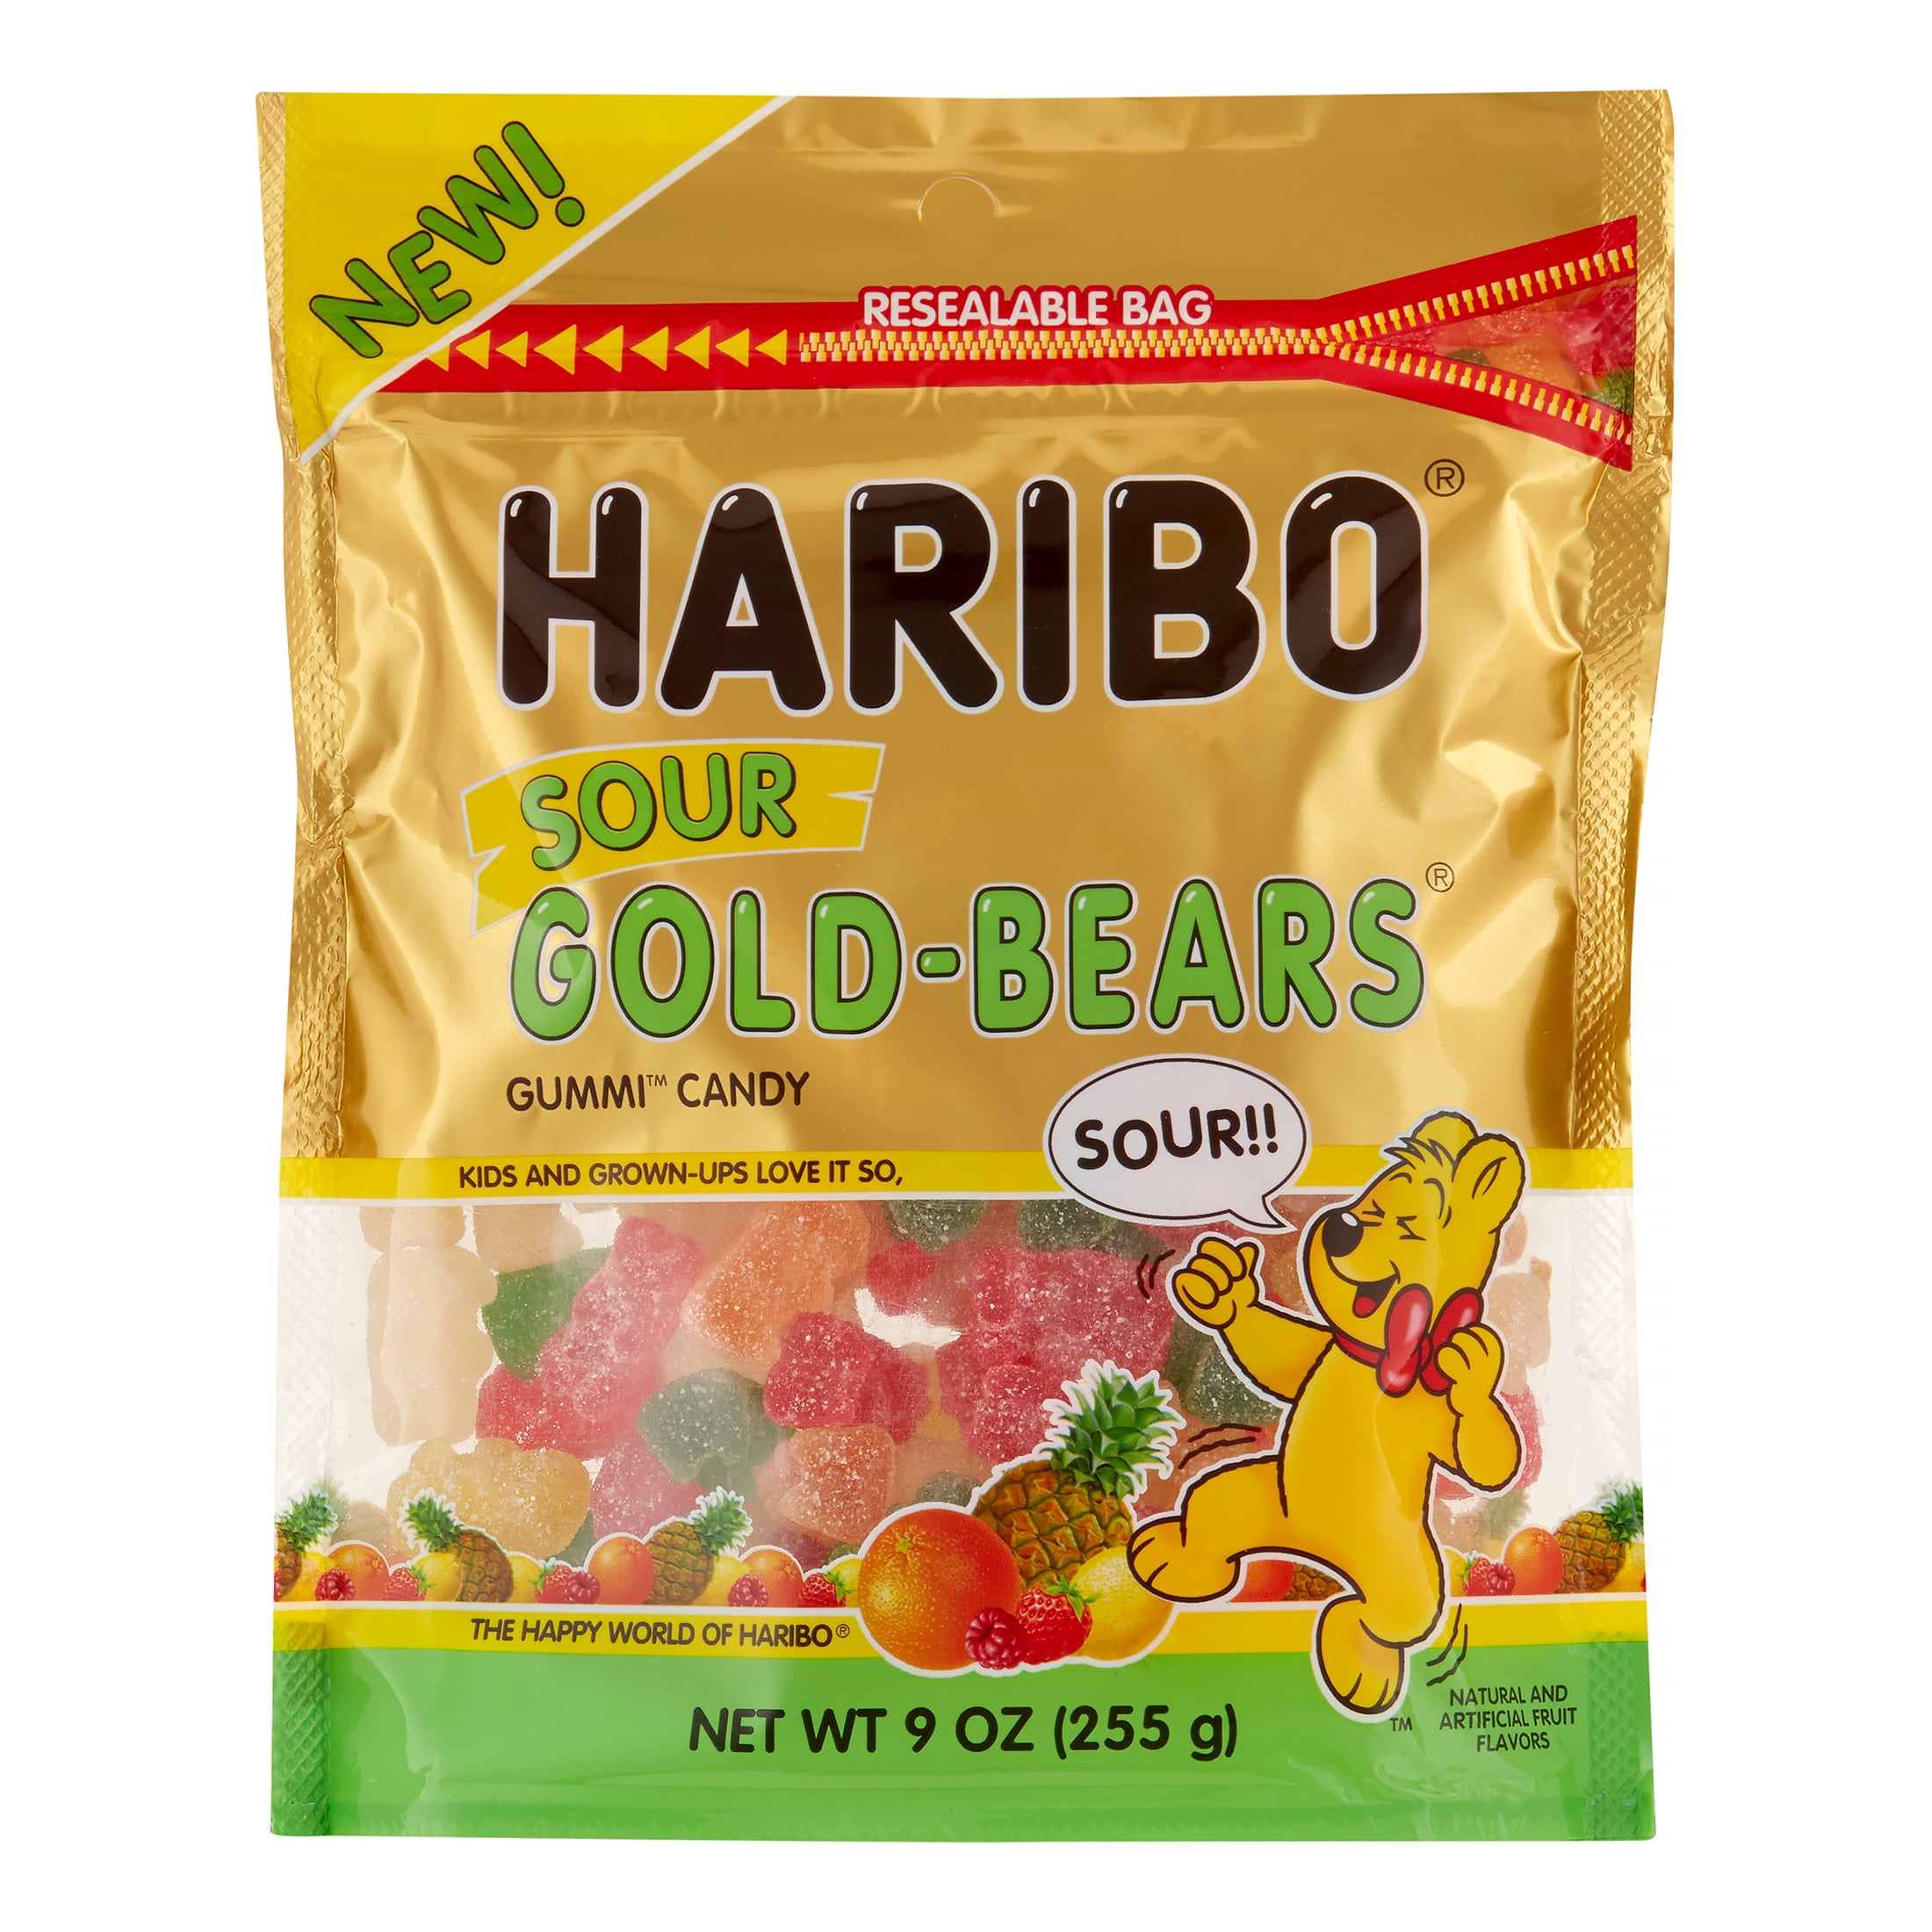 Haribo Sour Gold Bears Gummi Candy - Shop Candy at H-E-B